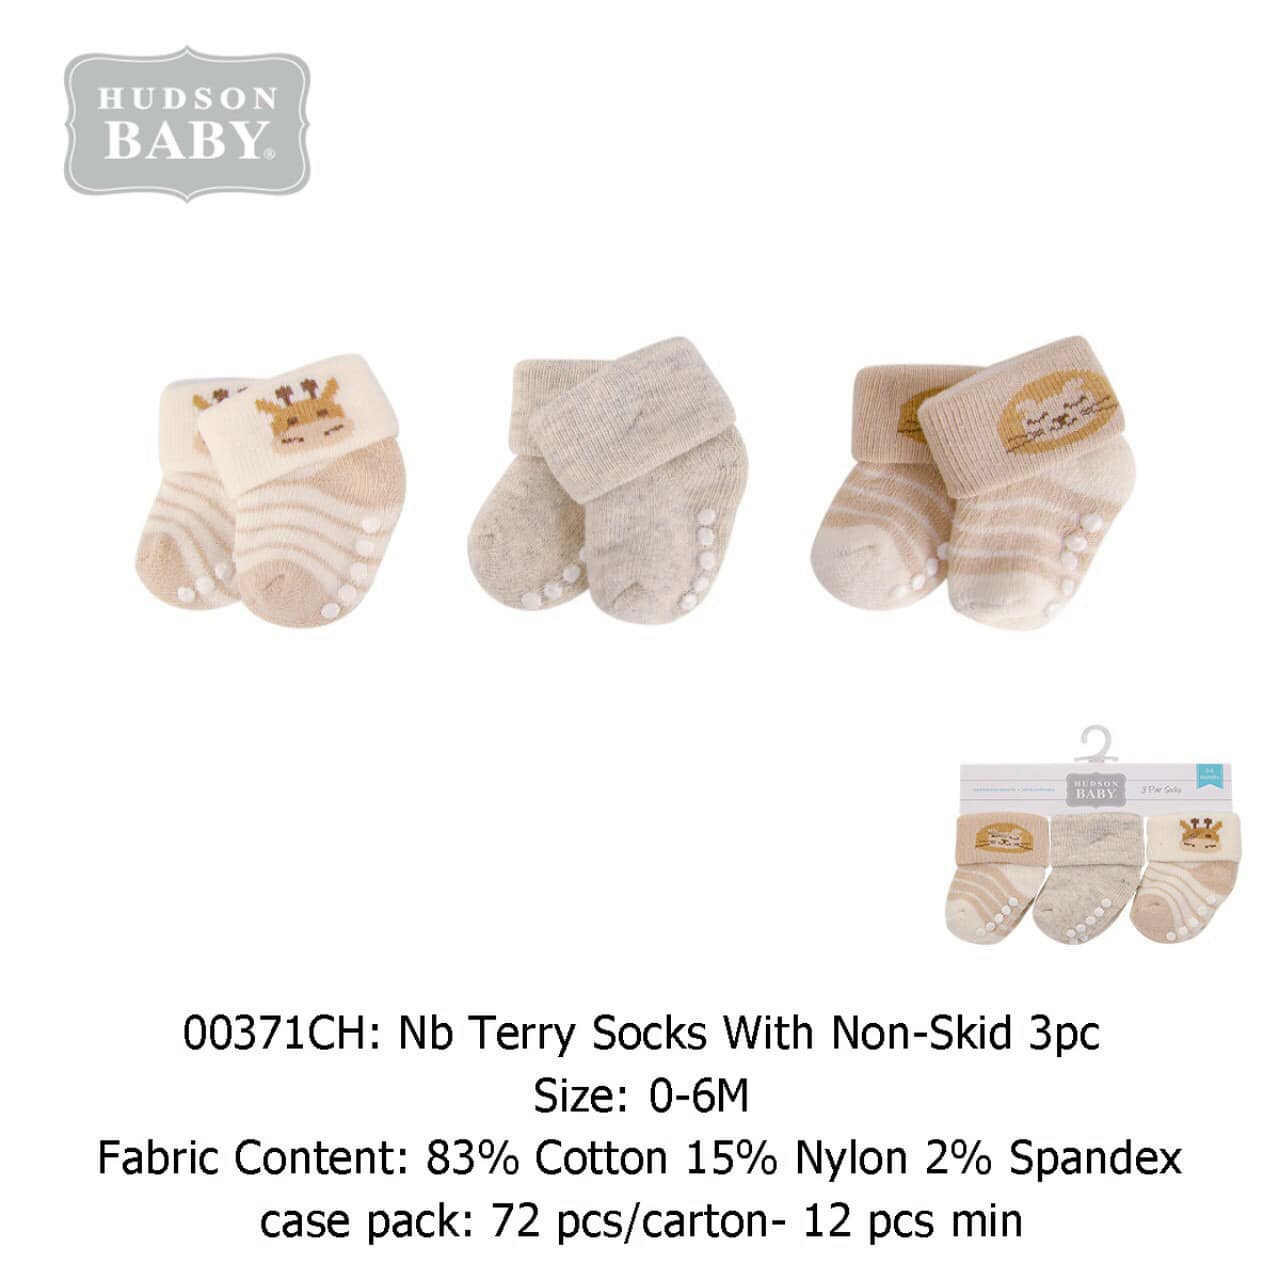 Hudson Baby 00371CH Newborn Terry Socks with Non-Skid 3pcs (0-6M)